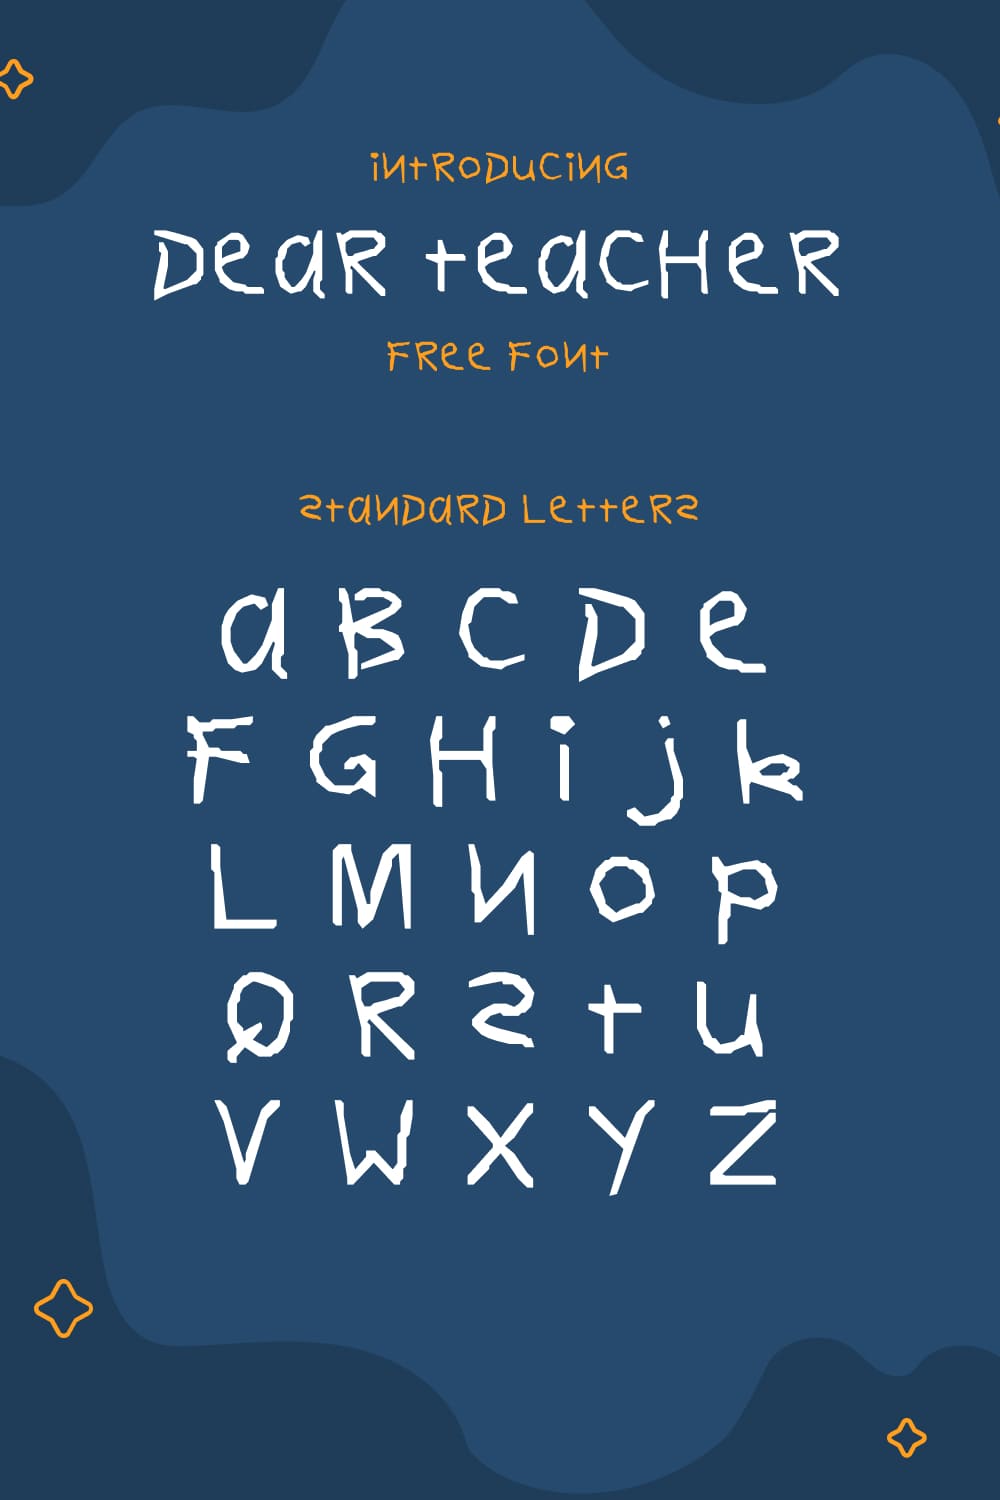 MasterBundles Pinterest Preview with Free Font Dear Teacher Standart Letters.